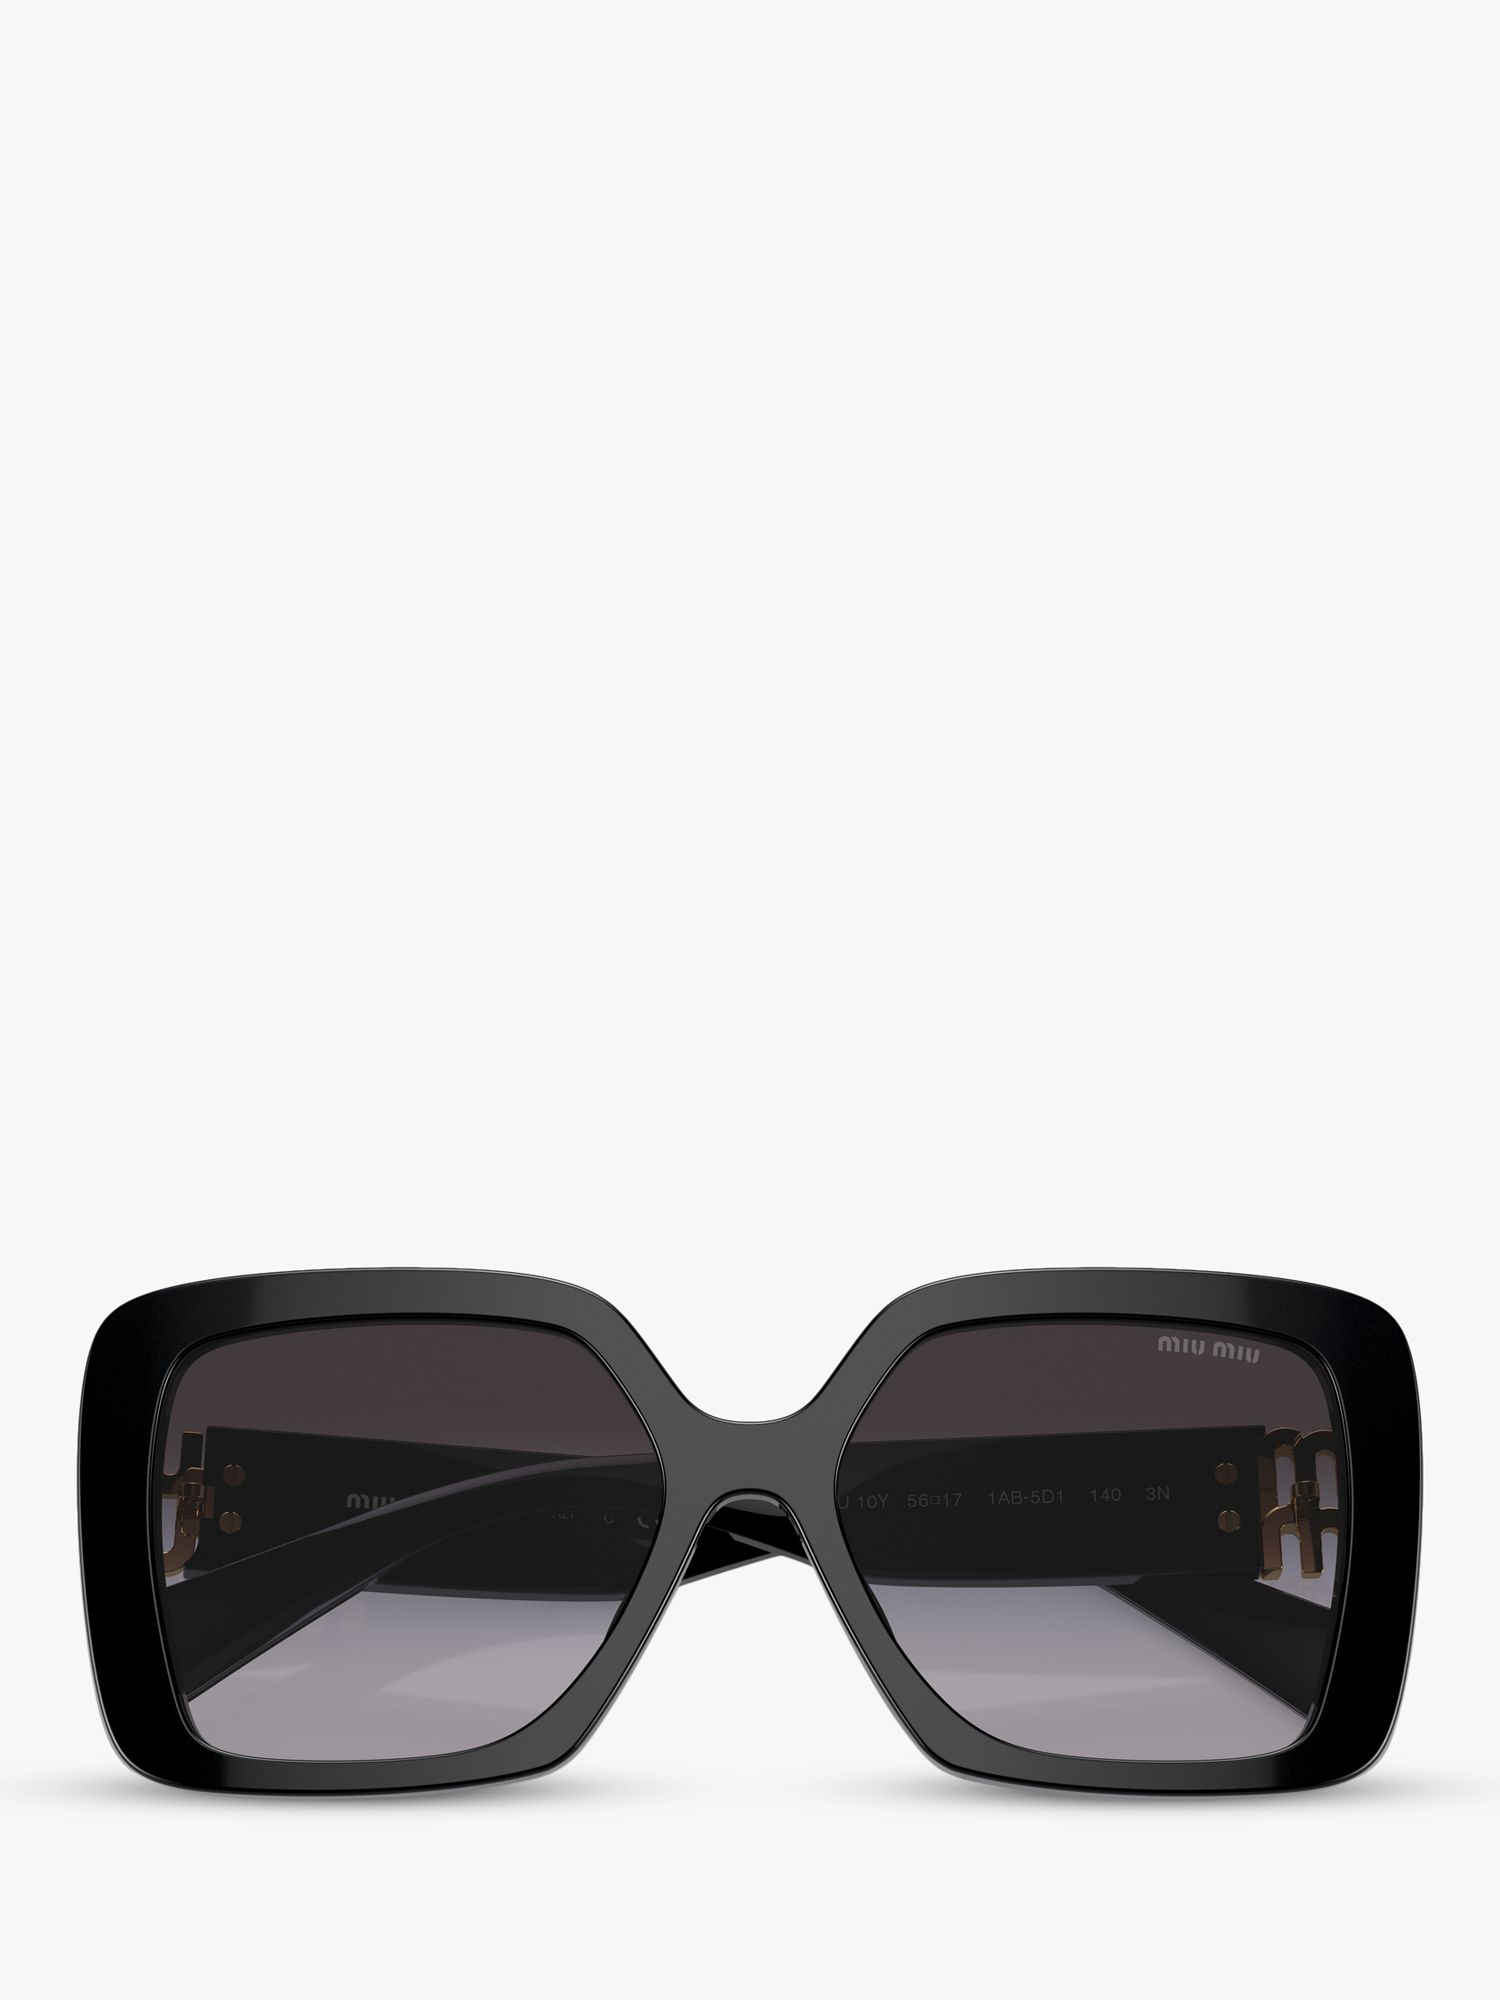 Miu Miu MU10YS8 Women's Rectangular Sunglasses, Black